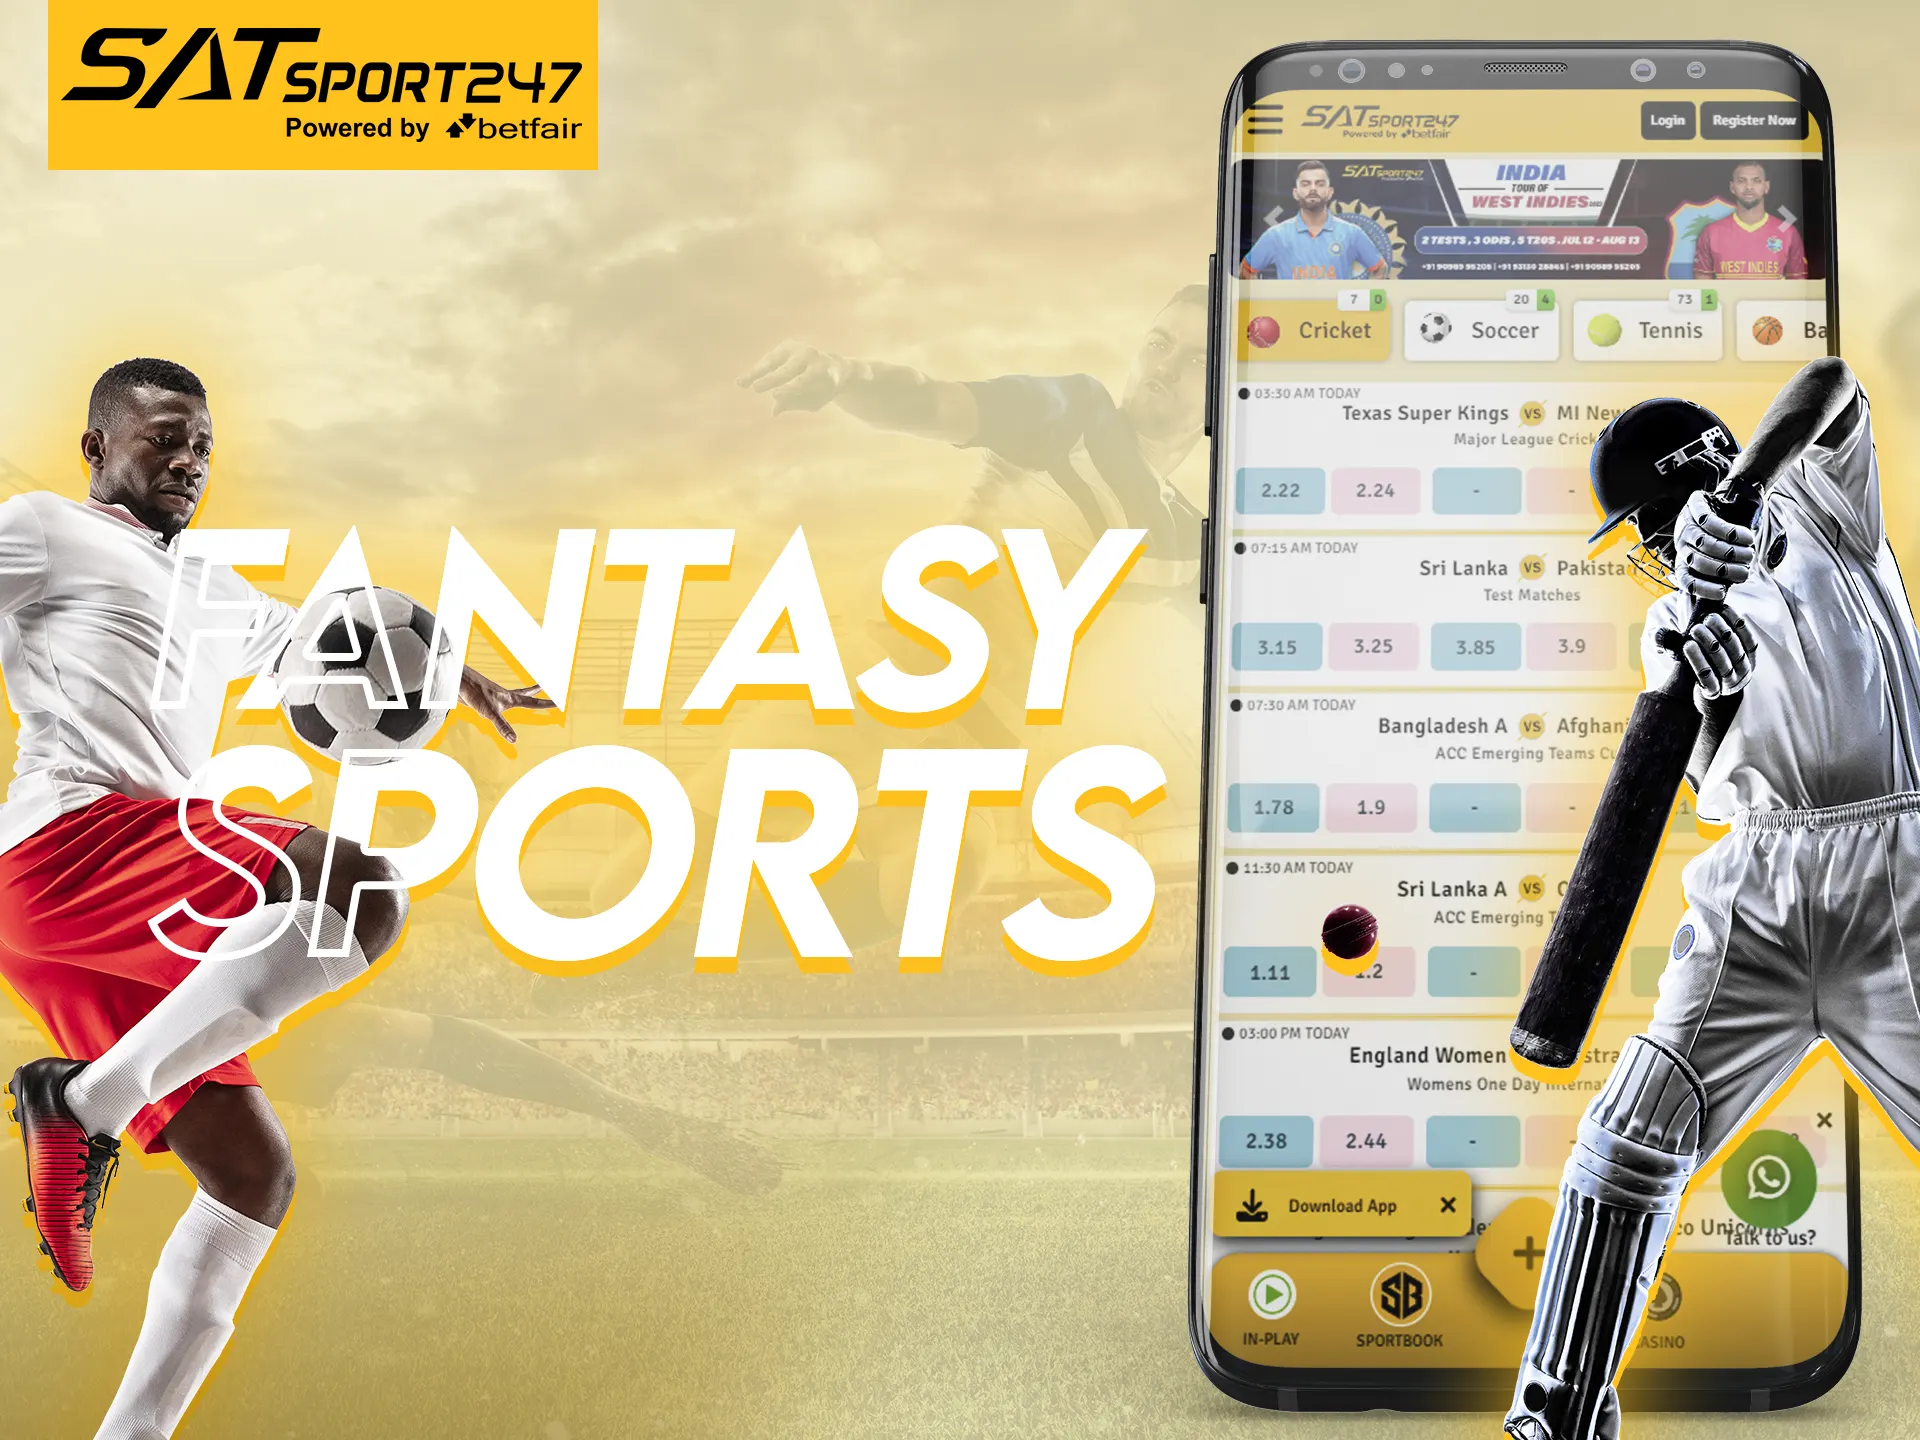 Bet on fantasy sports on the Satsport247 app.